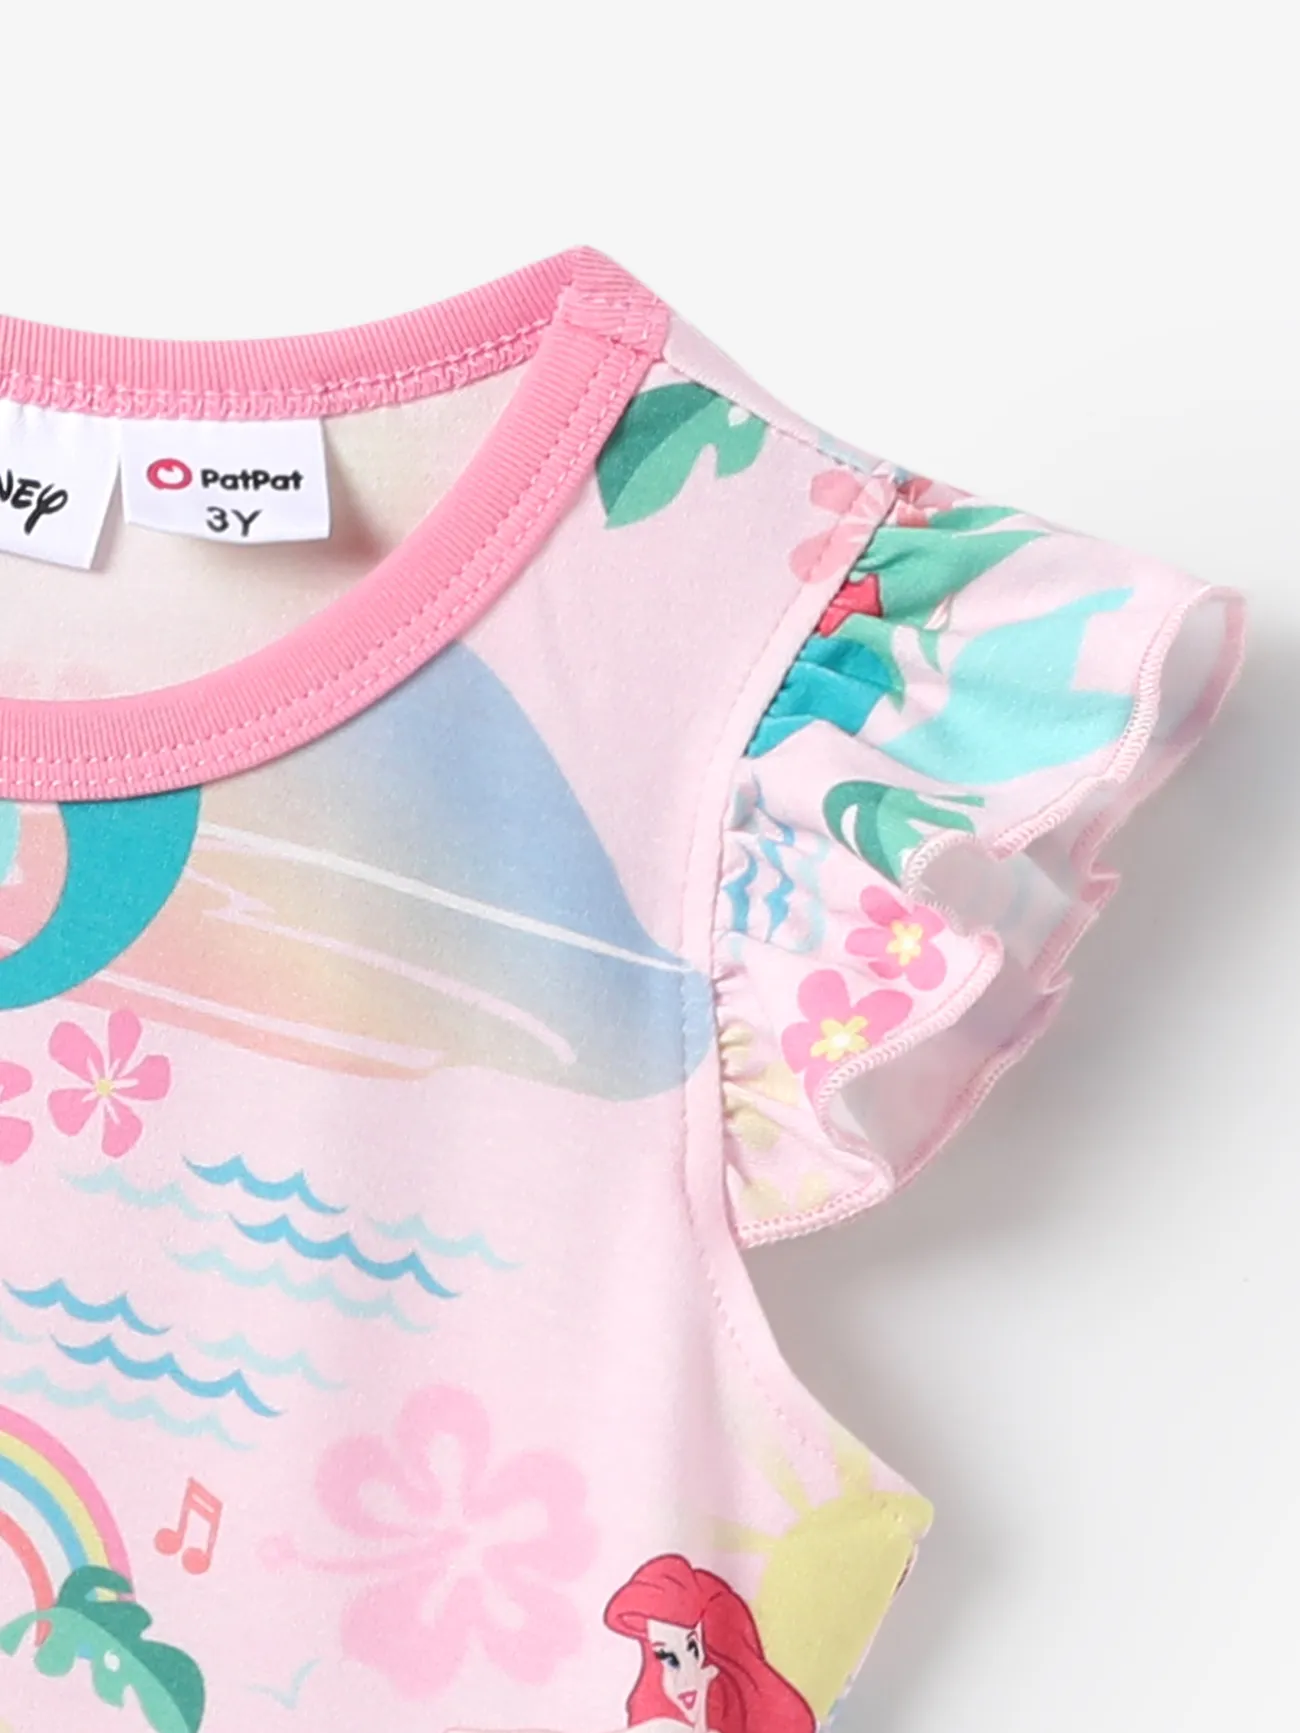 Disney Princess Toddler Girls Moana/Ariel 1pc Naia™ Tropical Flower and Plant Print Flutter-sleeve Dress Light Pink big image 1